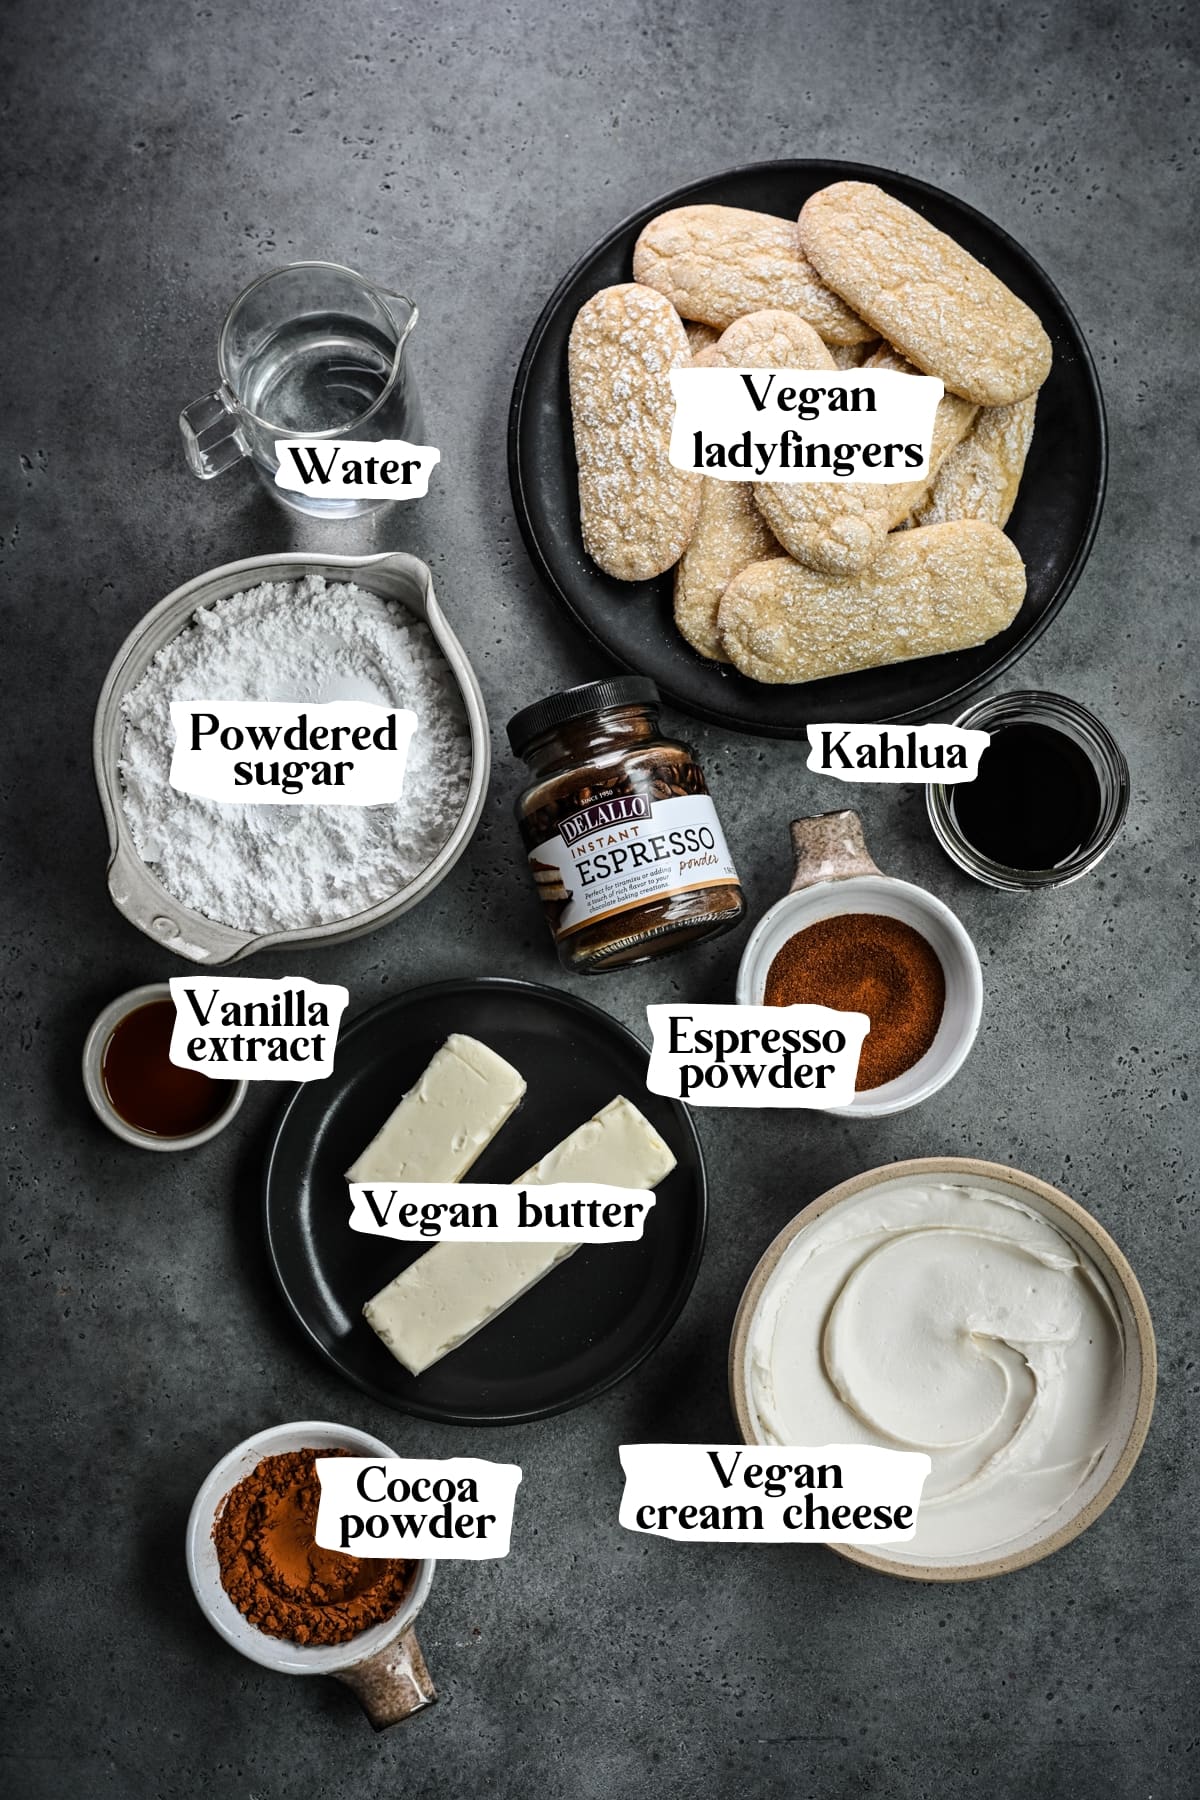 Overhead view of vegan tiramisu ingredients, including water, vegan ladyfingers, powdered sugar, kahlua, espresso powder, vanilla extract, vegan butter, vegan cream cheese,  and cocoa powder.